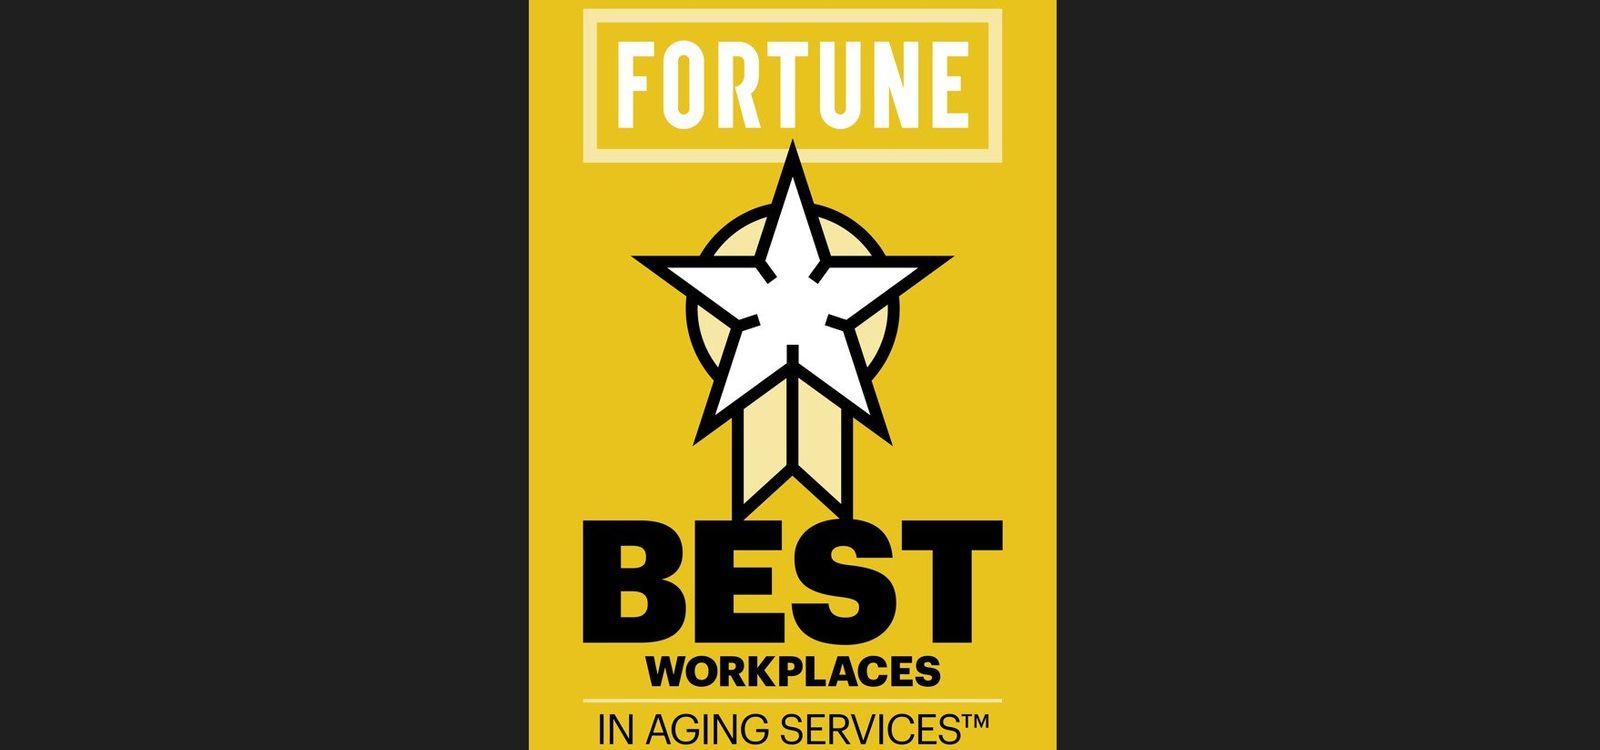 fortune-best-workplaces.jpg